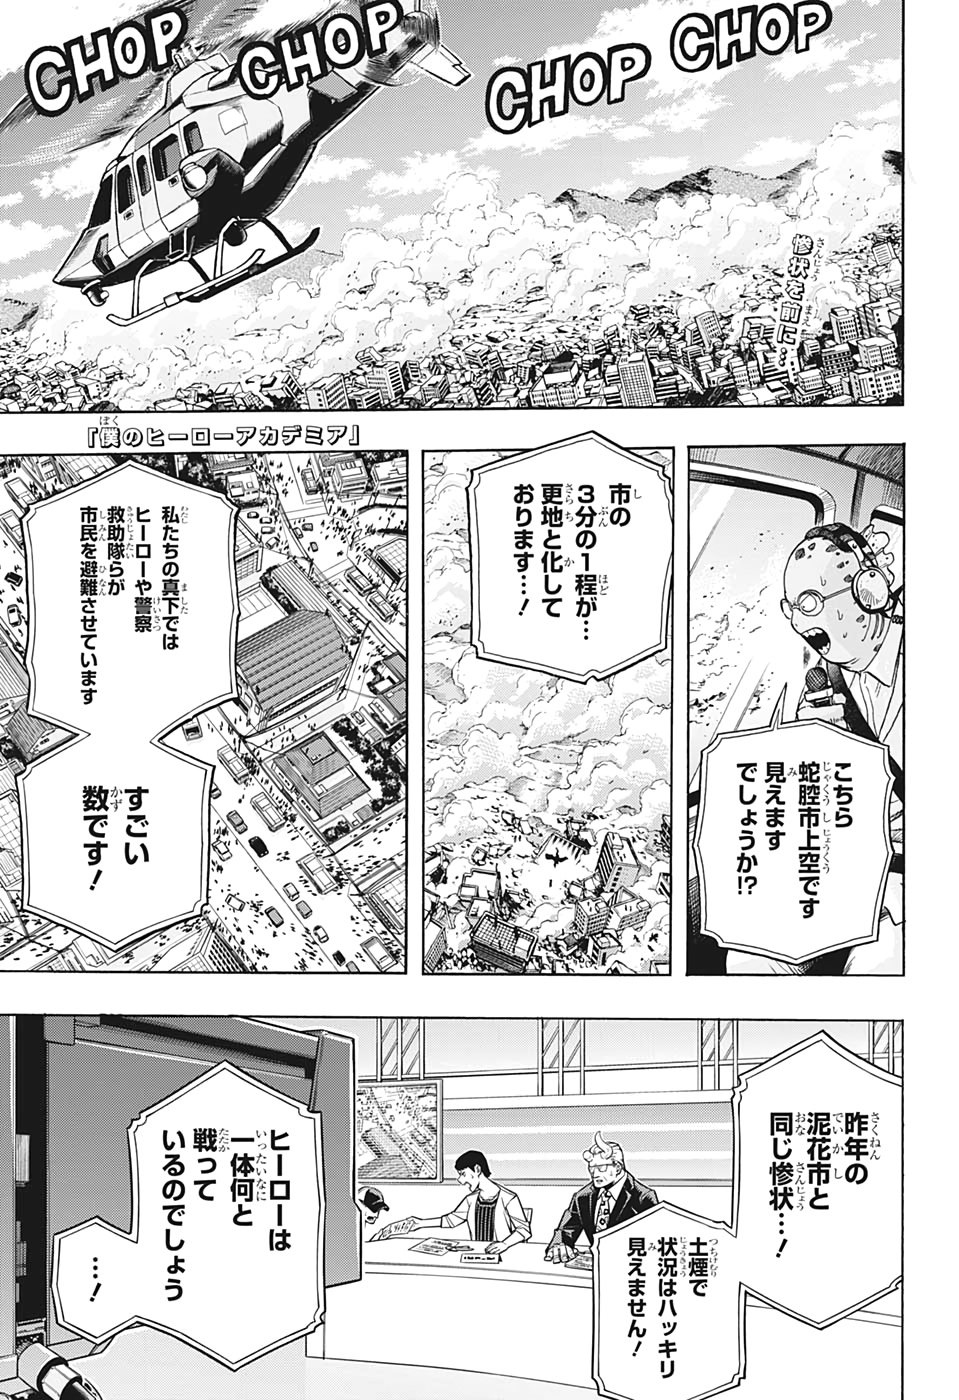 Boku no Hero Academia - Chapter 276 - Page 1